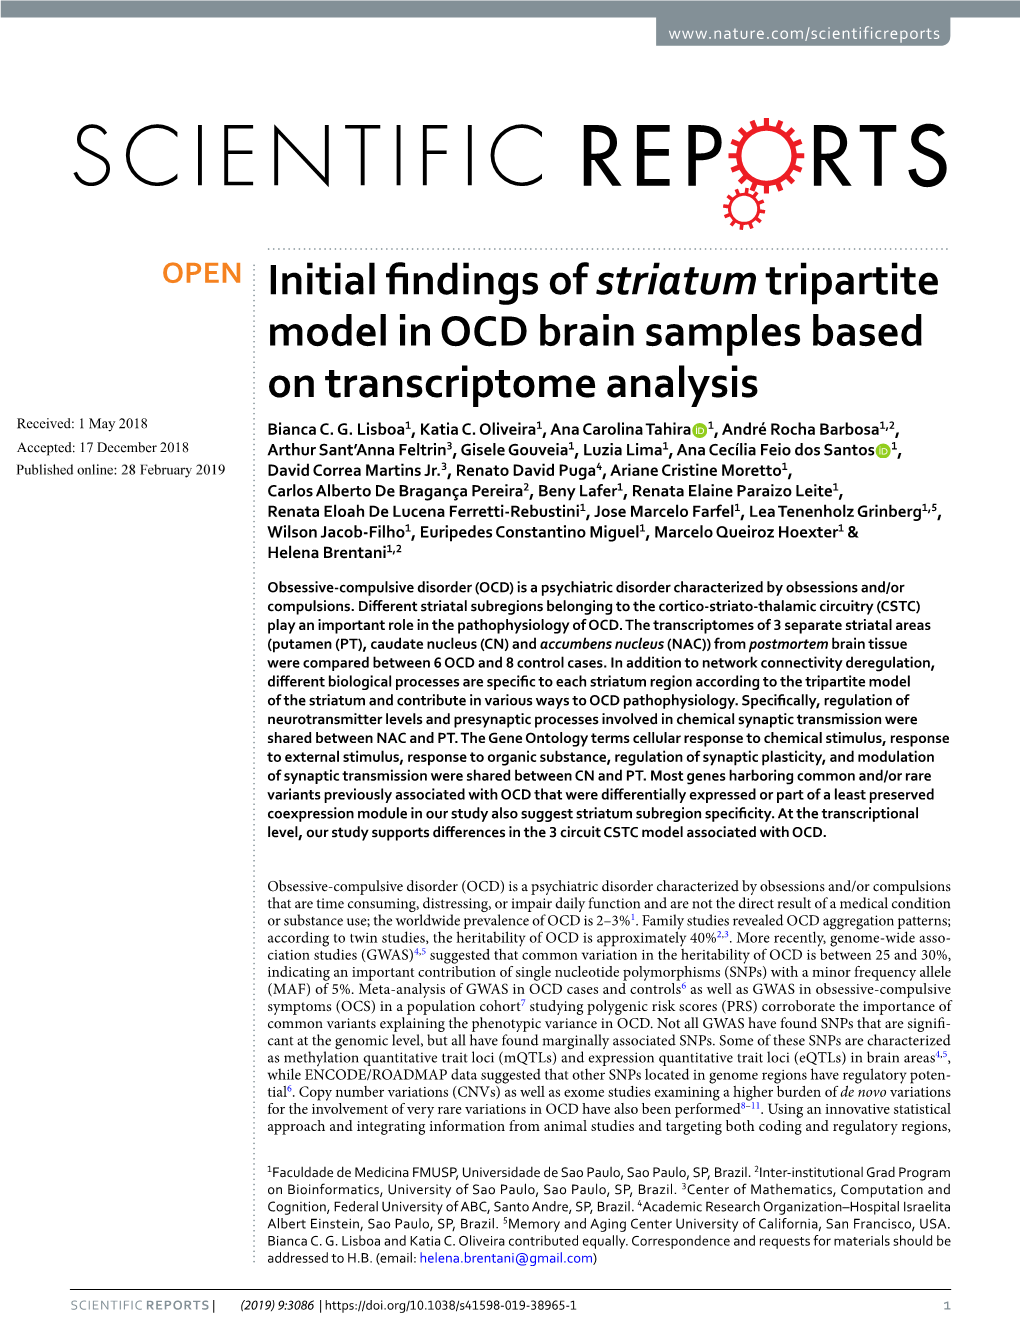 Initial Findings of Striatum Tripartite Model in OCD Brain Samples Based